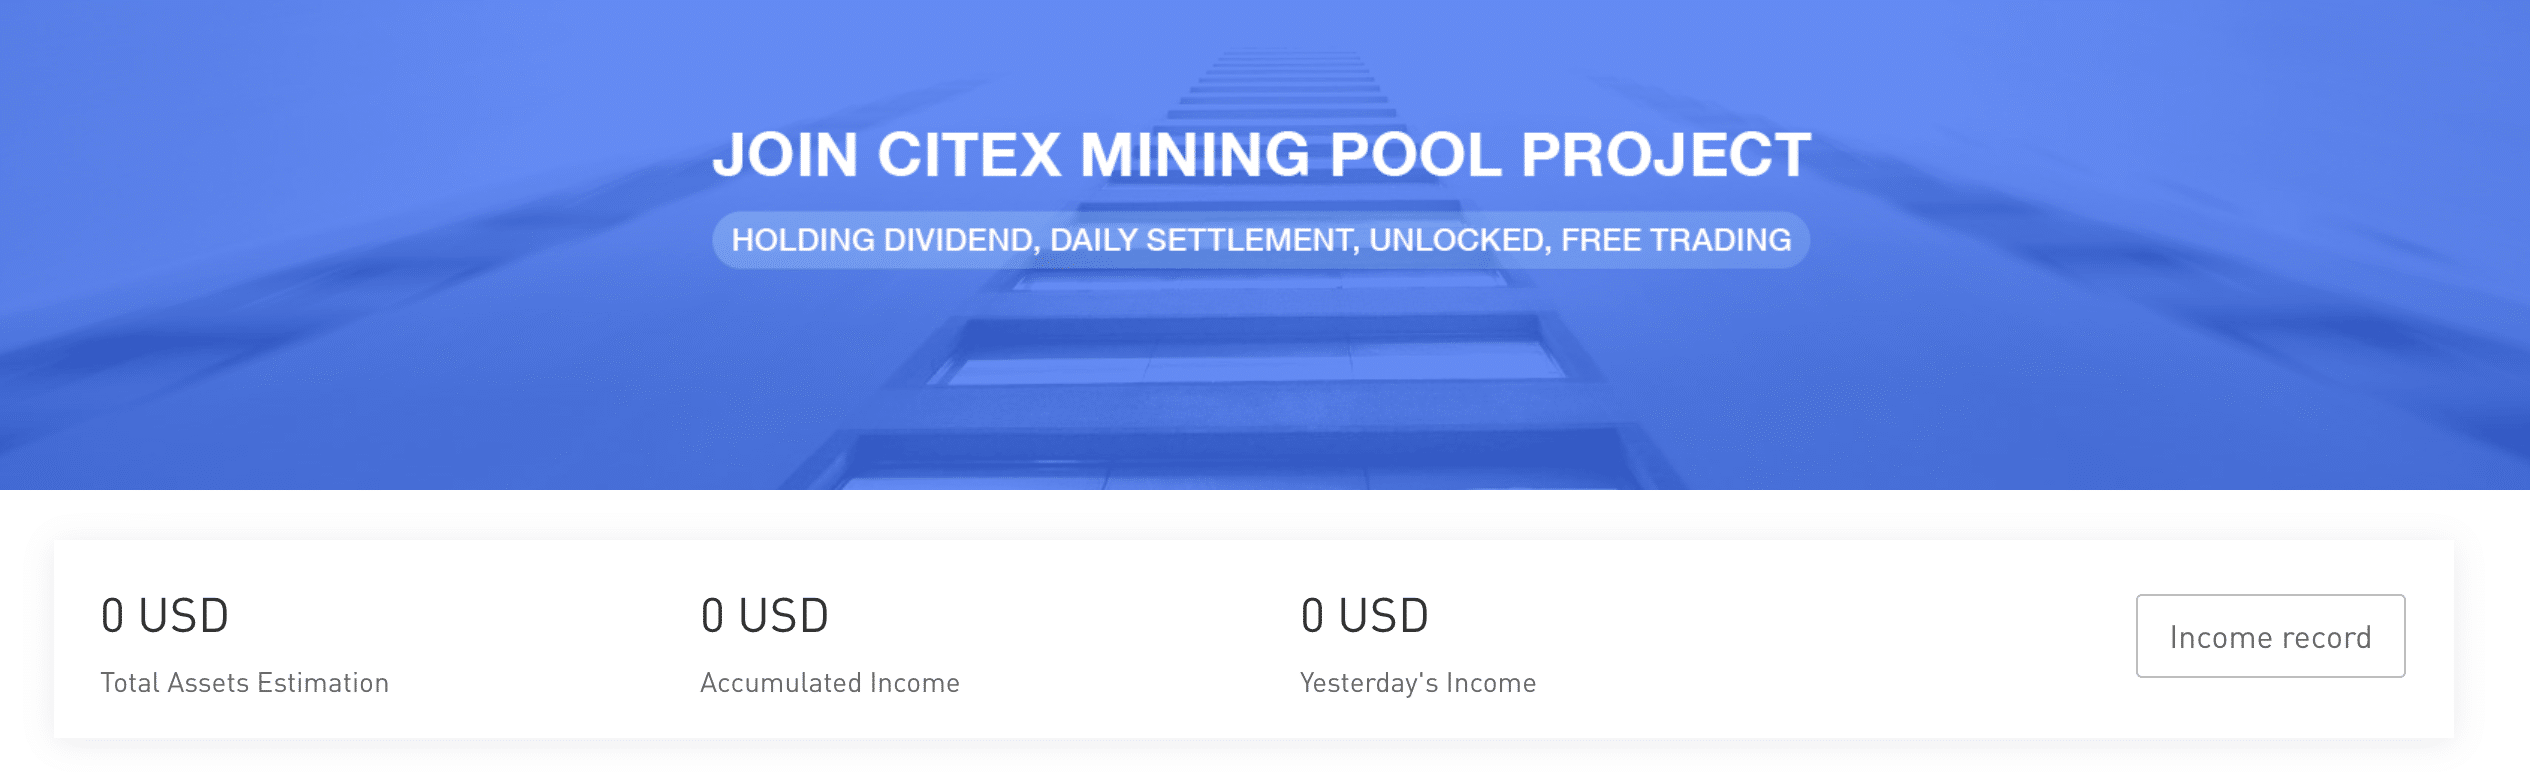 CITEX mining pool